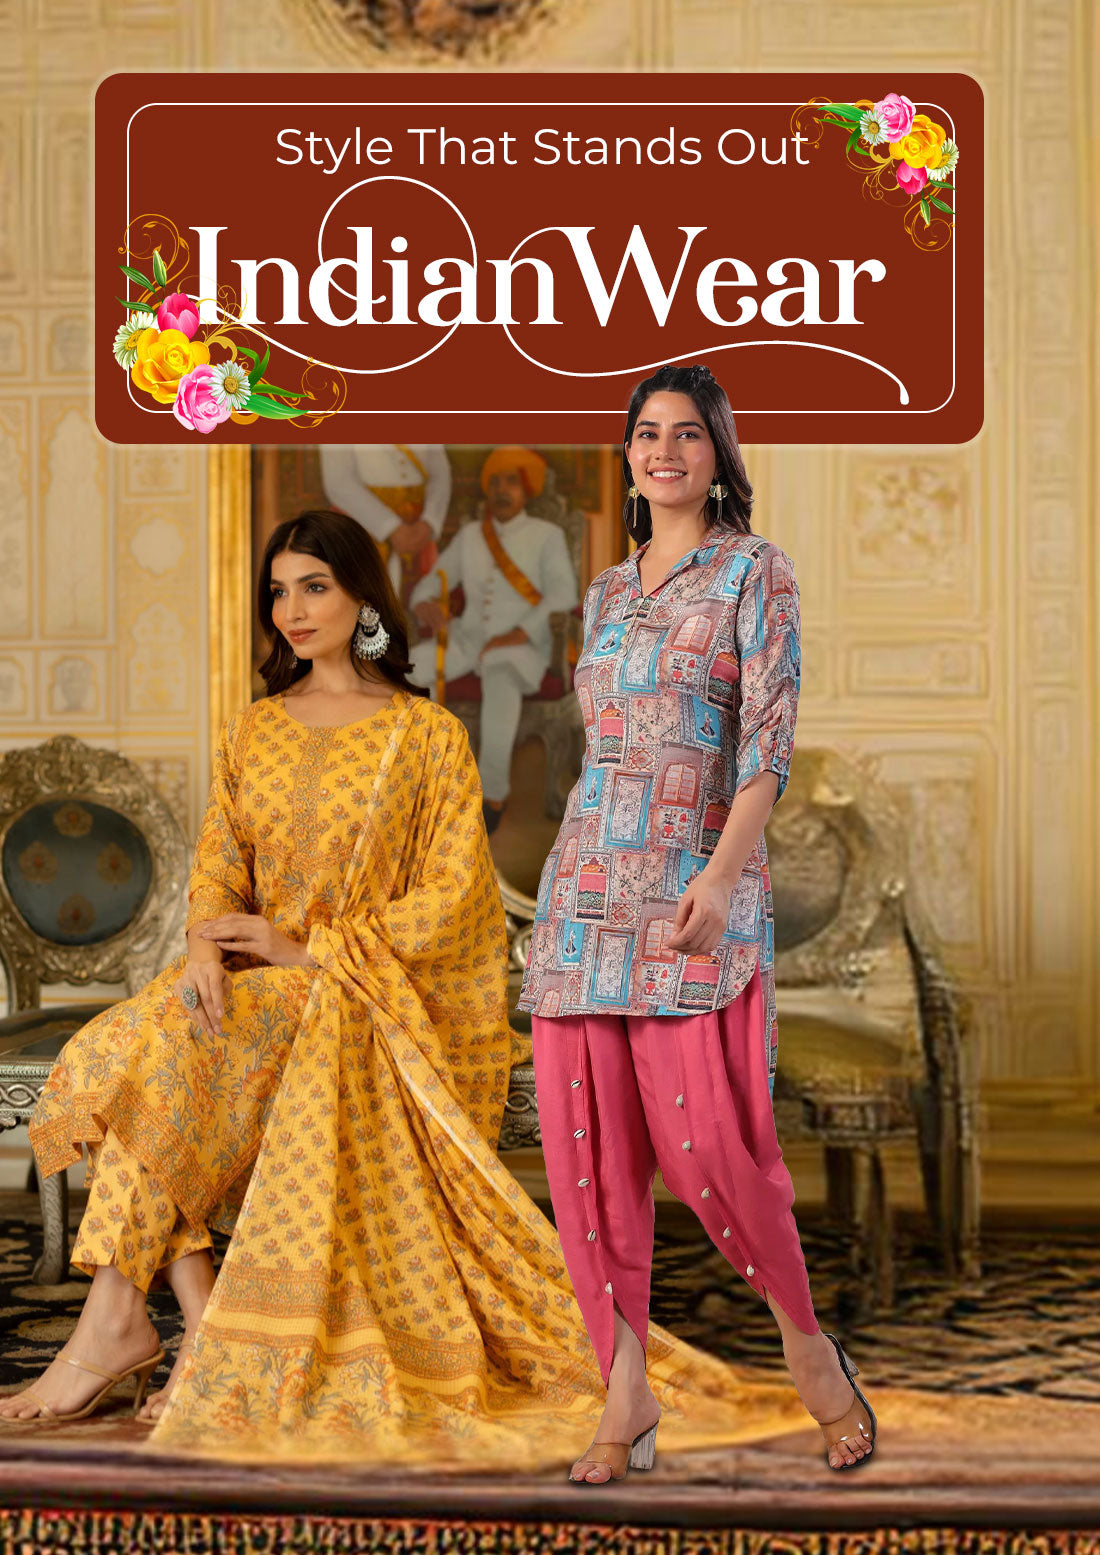 Indian-Wear-banner-phone-1.jpg